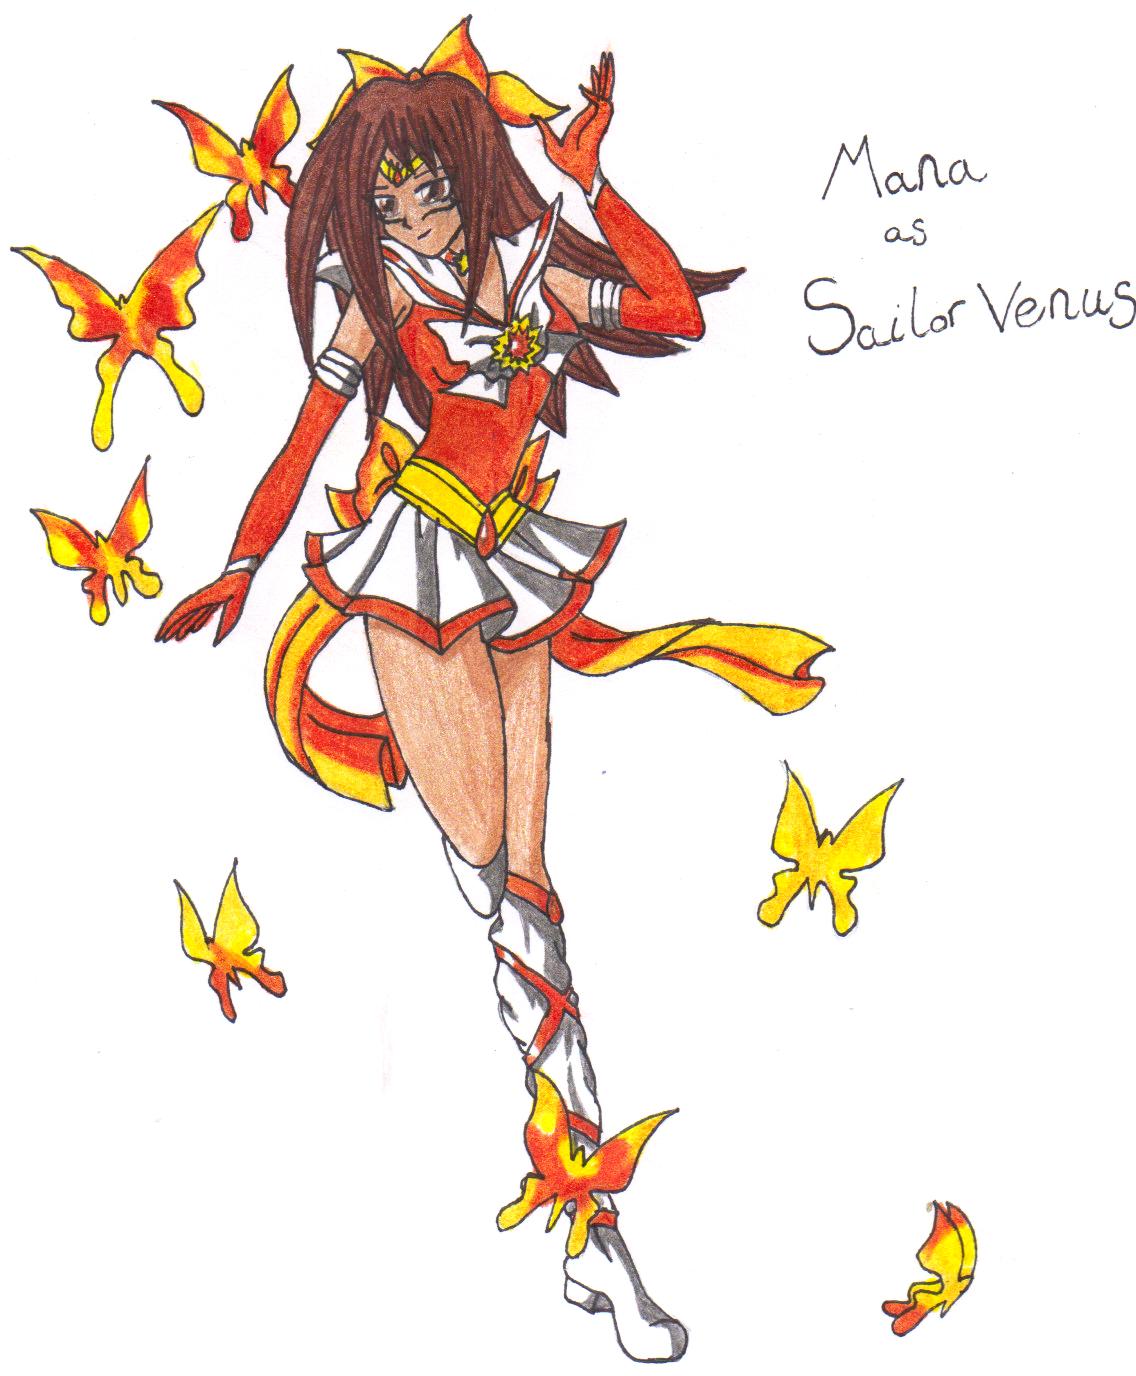 Mana as Sailor Venus by setoXyamiKaiba4ever